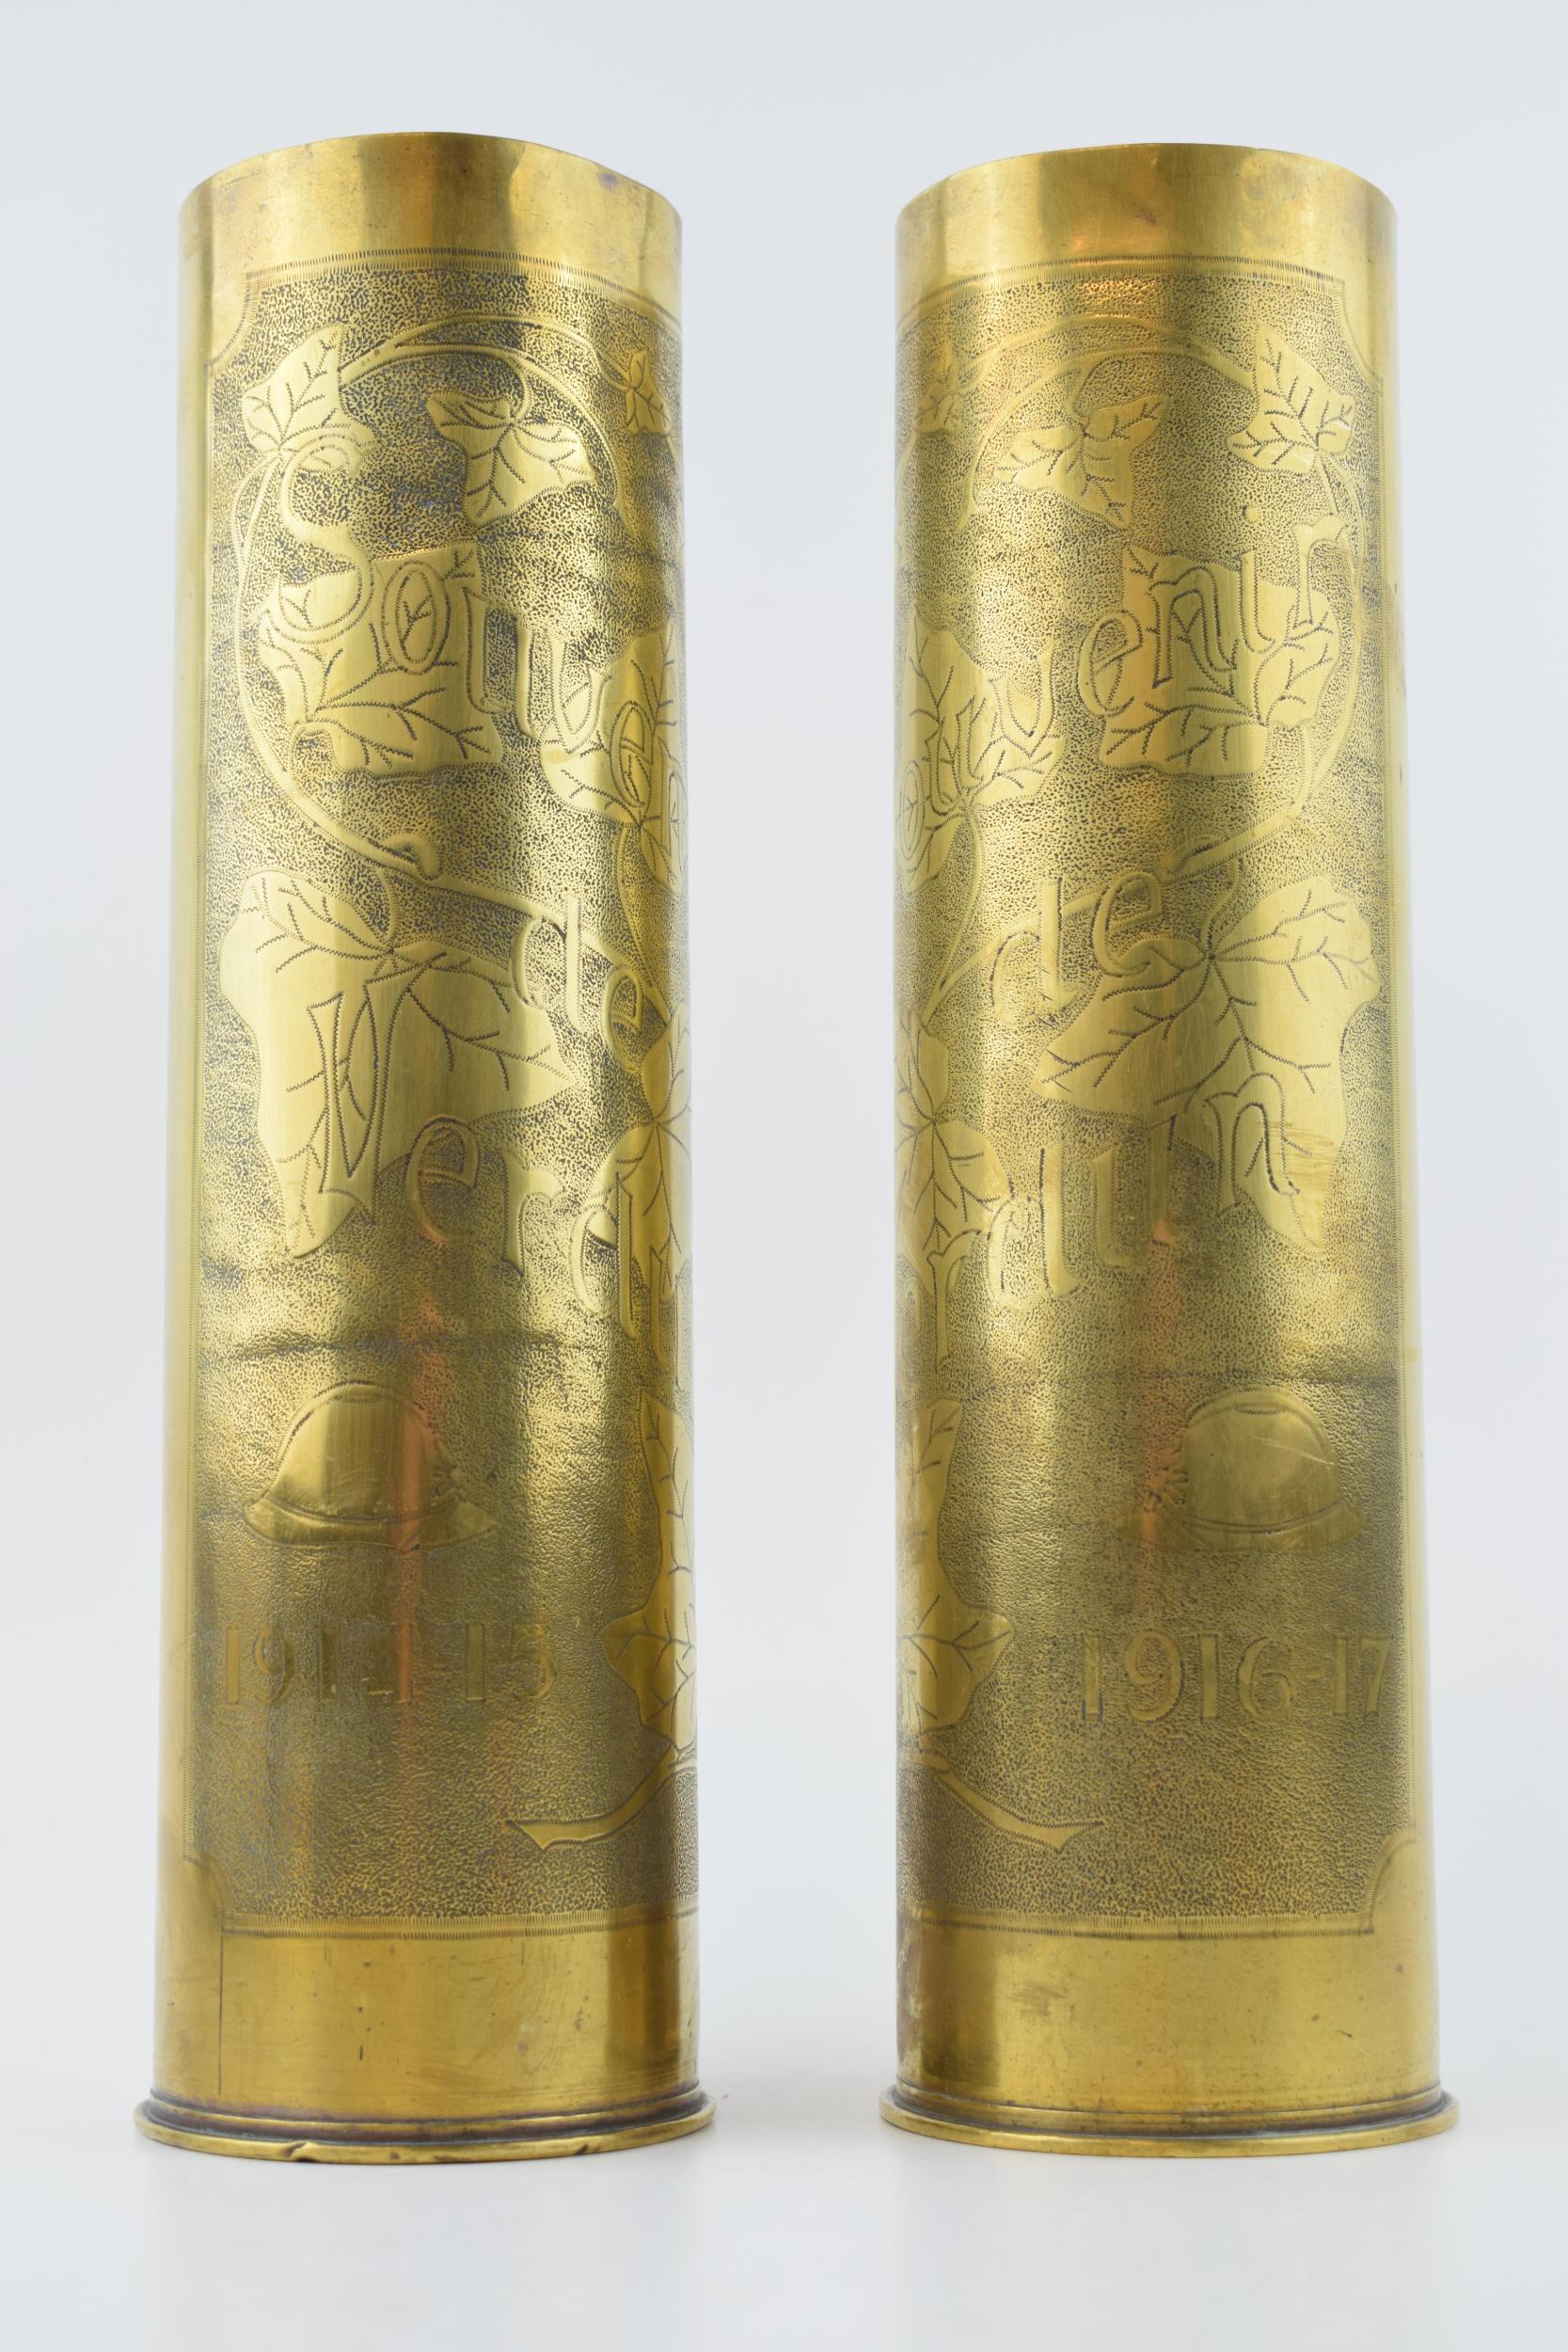 A pair of Trench Art vases, 29cm tall, engraved decoration ‘Souvenir de Verdun’, one being 1915